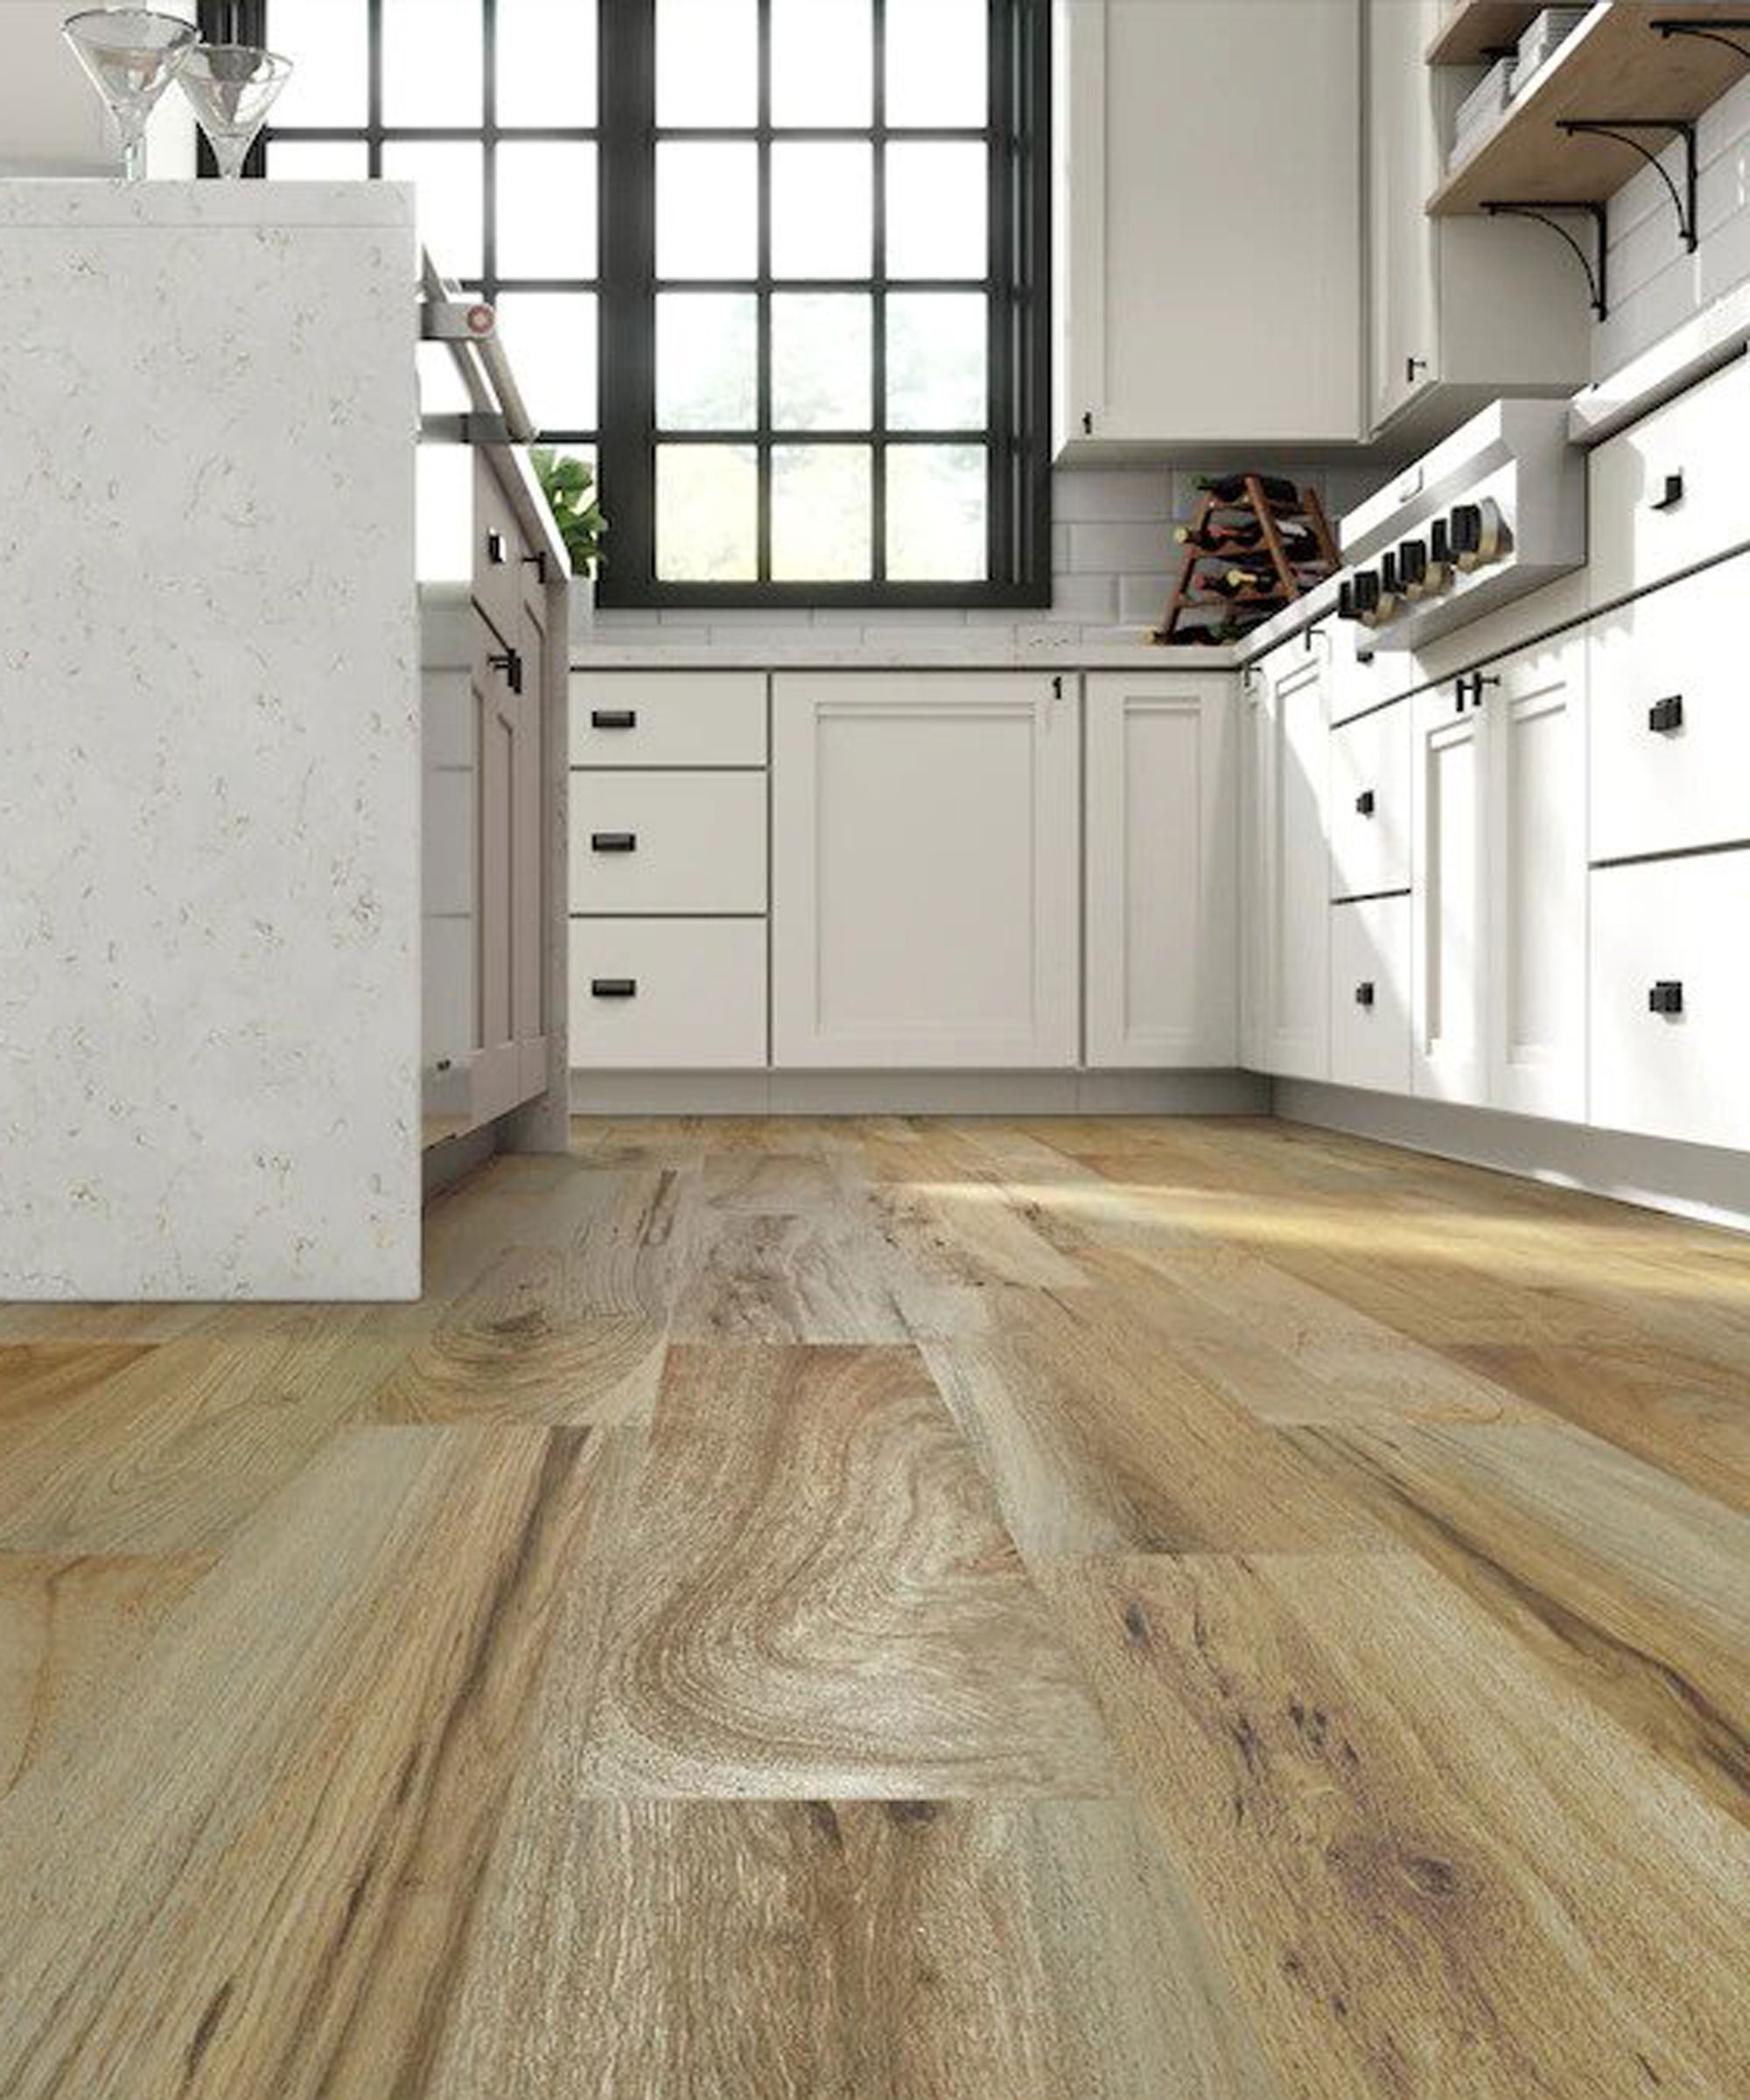 Updated Modern Kitchen With Hardwoodlook Vinyl Flooring